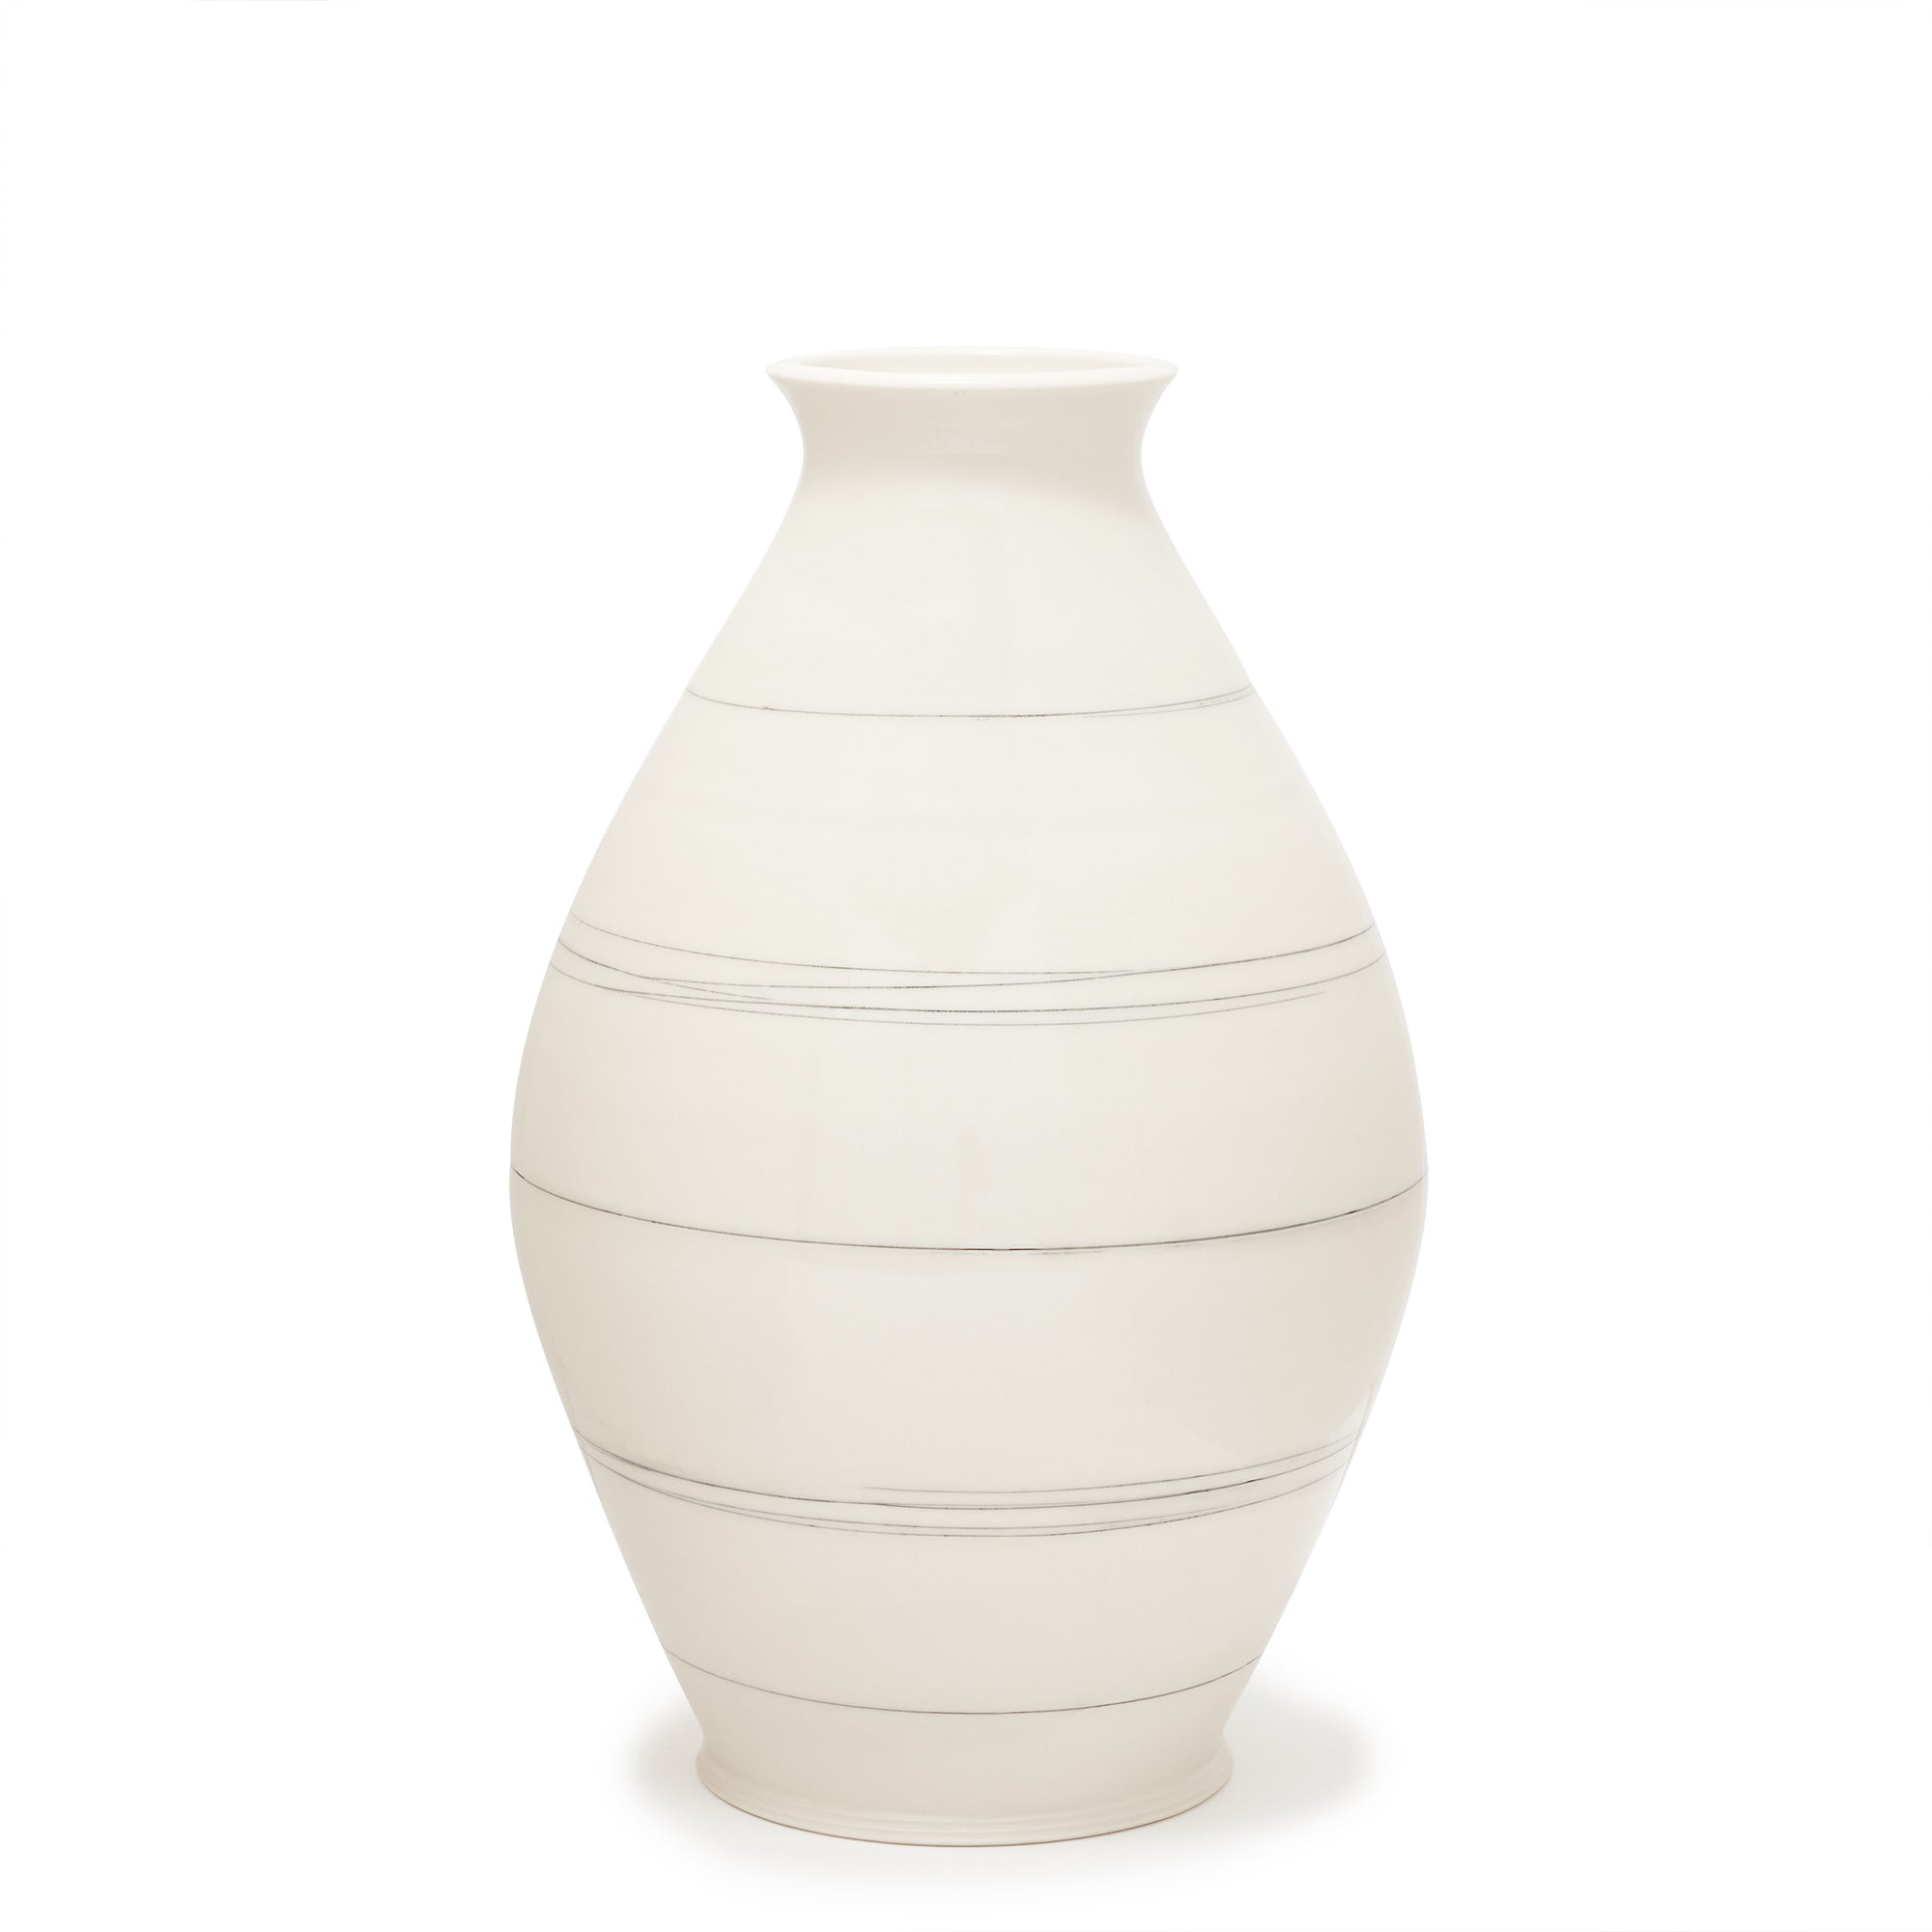 Large Ltd. Edition Hand-Thrown Vase